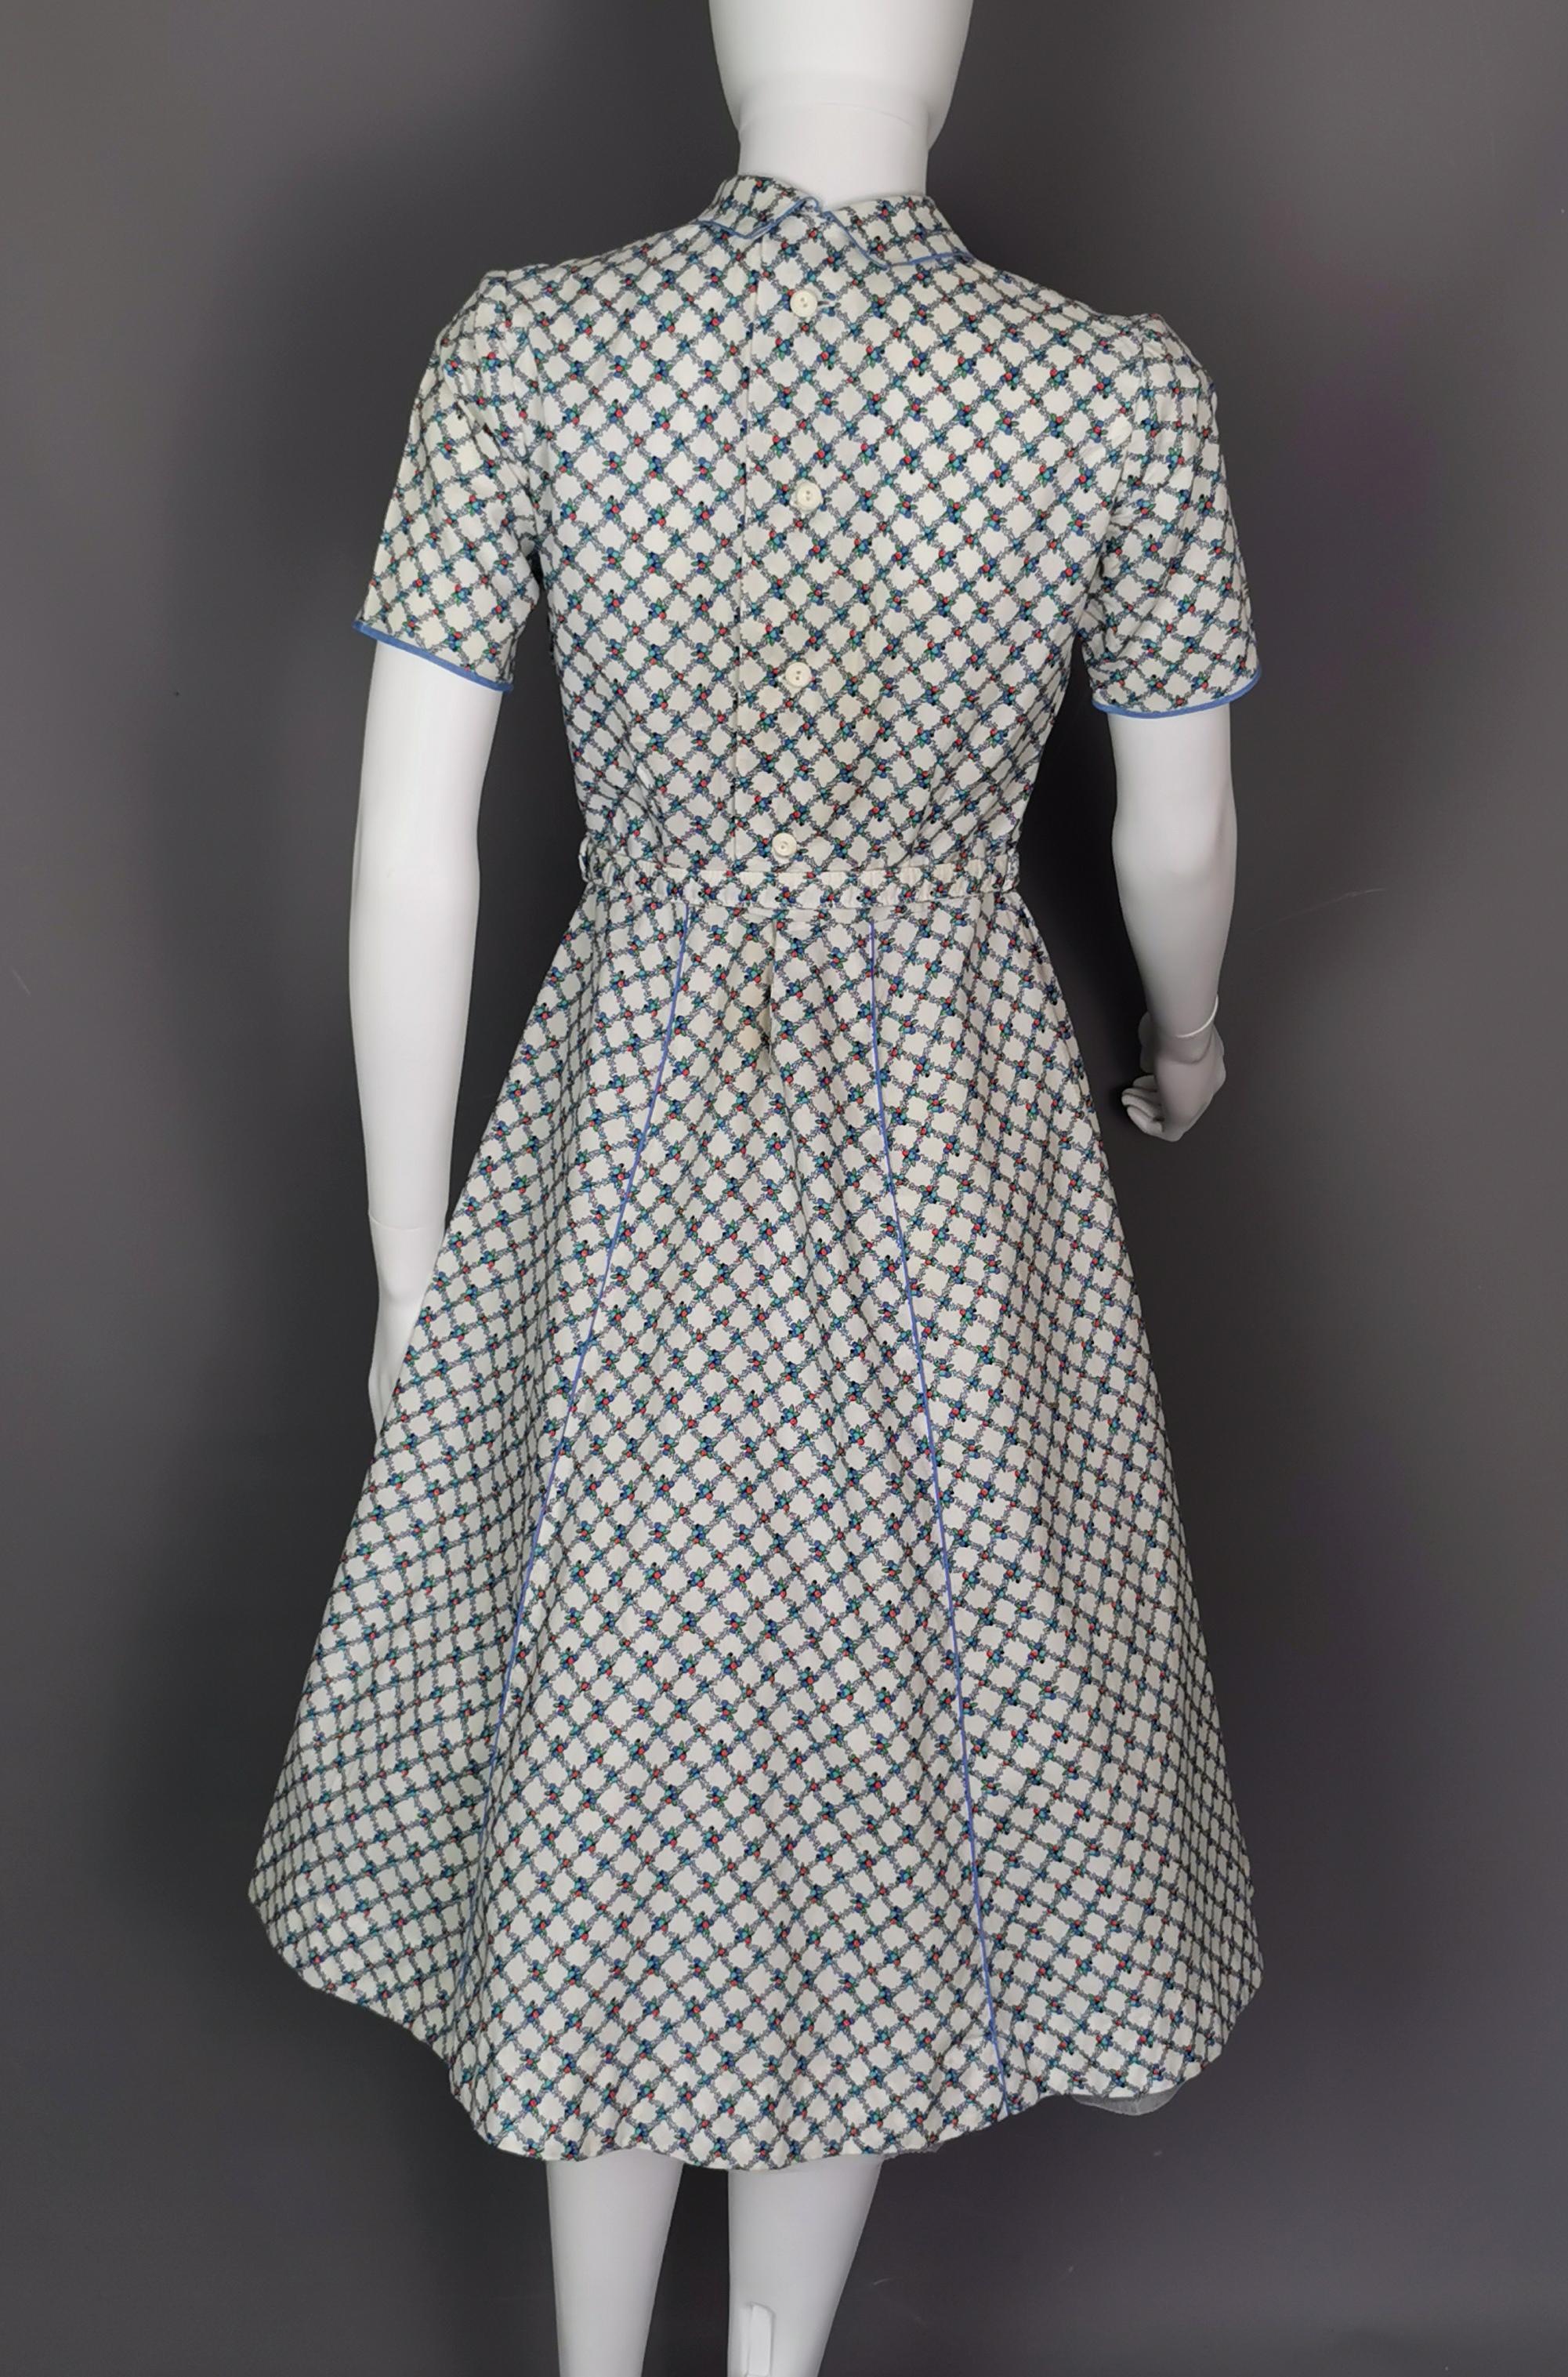 Vintage 1940s American pinafore style swing dress, fruit basket  1